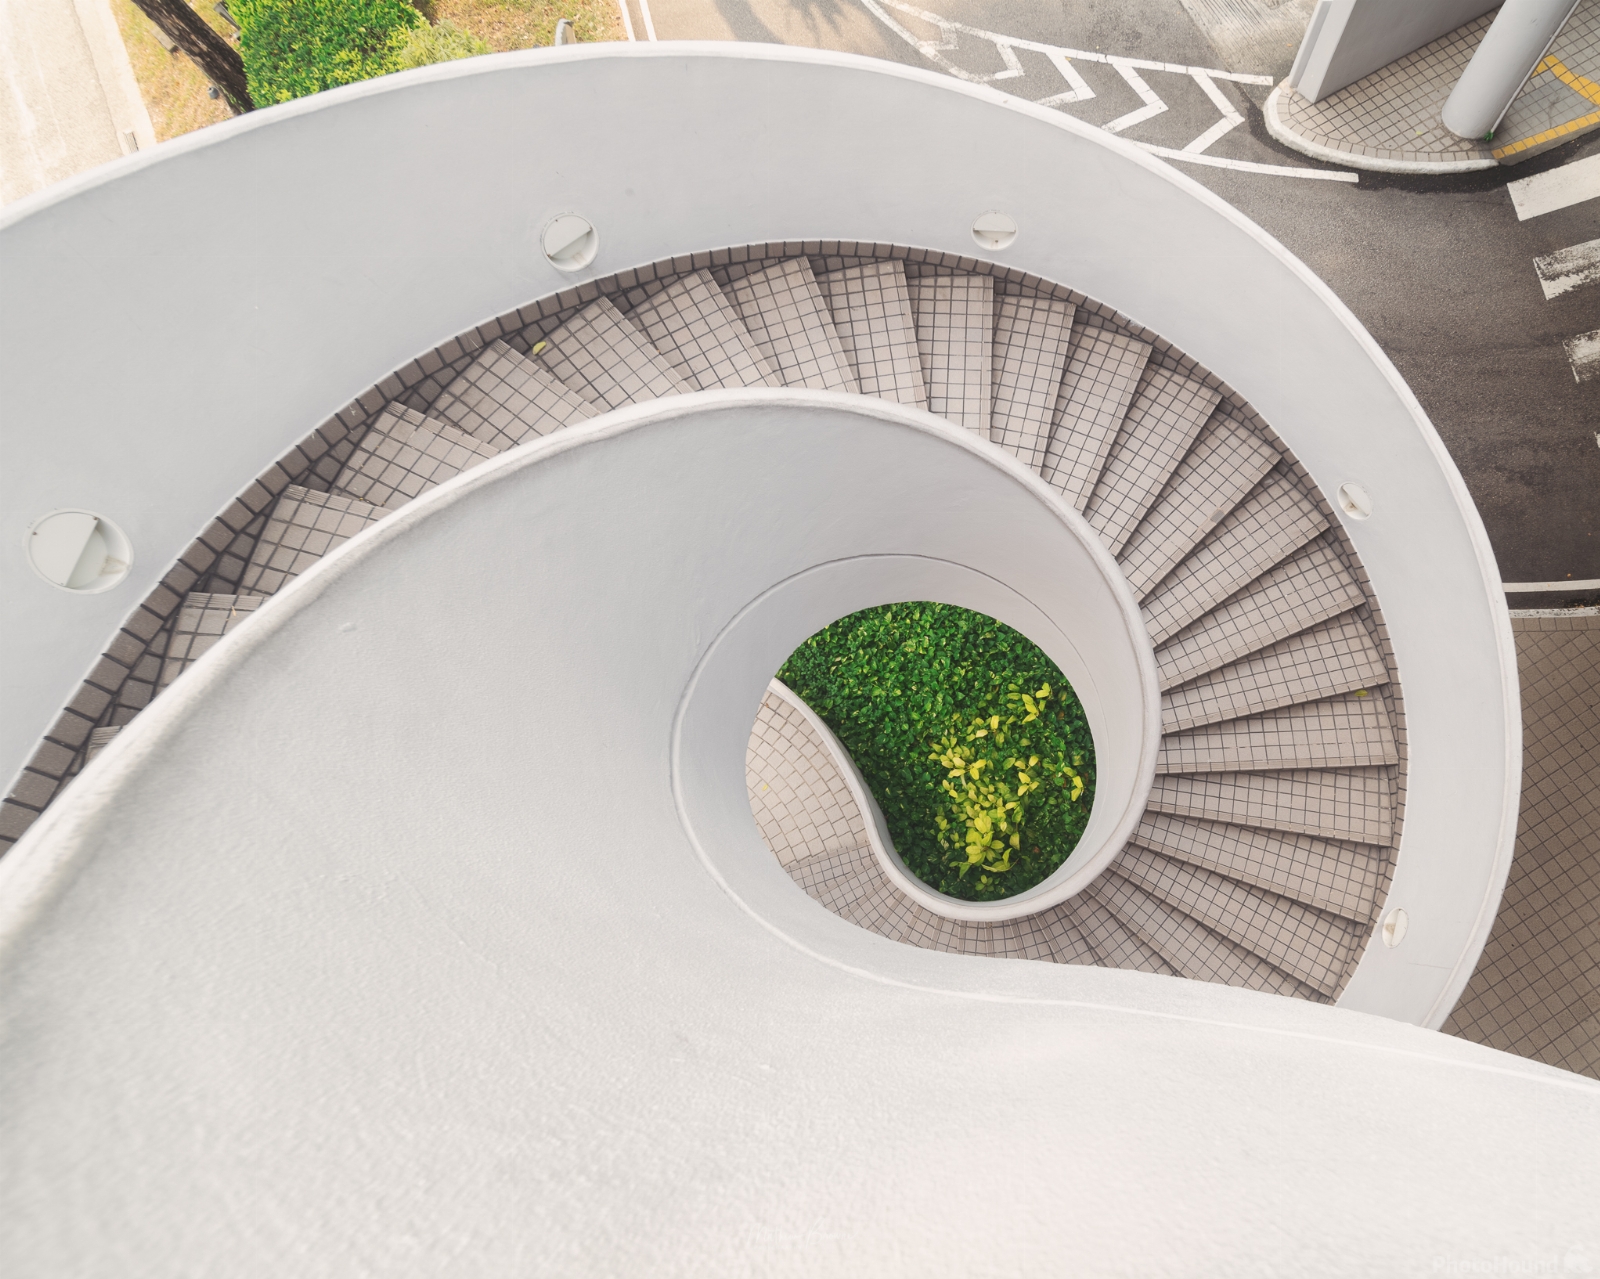 Image of Raffles Blvd Spiral Stairs by Mathew Browne